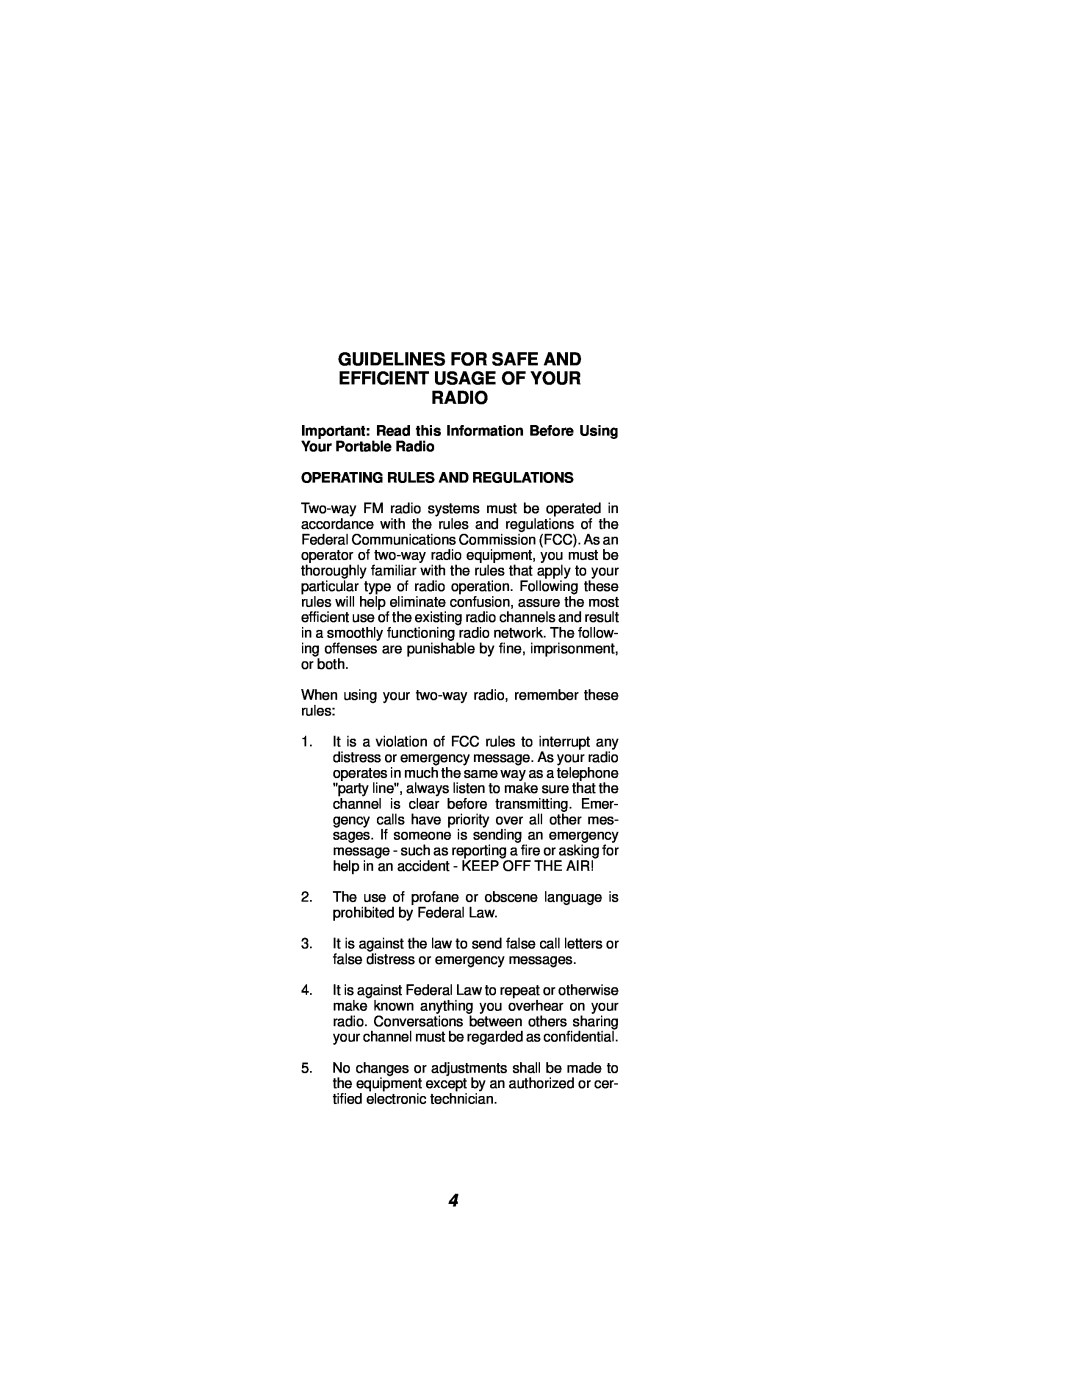 Ericsson NPC-50 manual Operating Rules And Regulations 